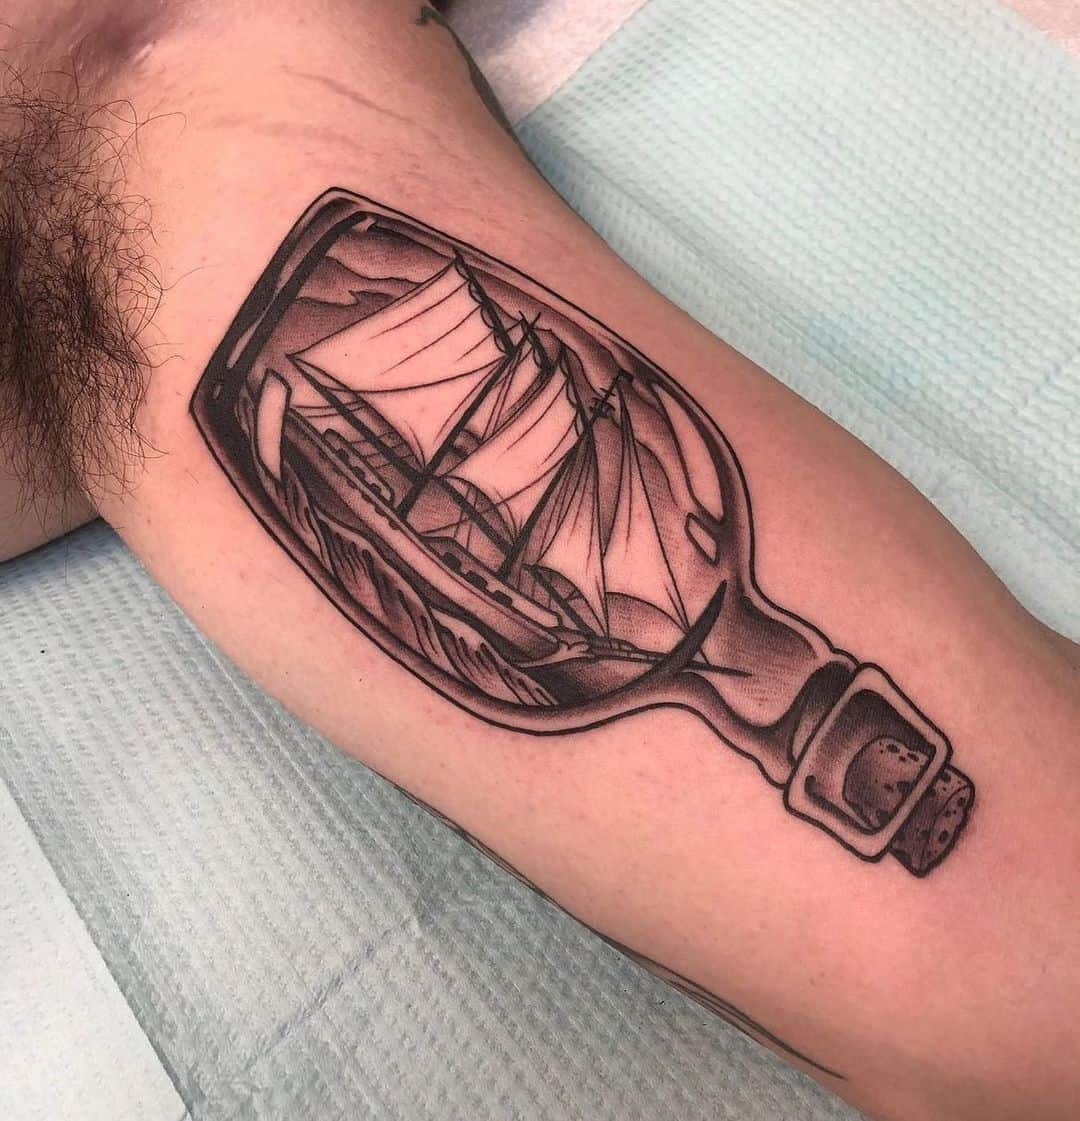 ship in a bottle tattoo